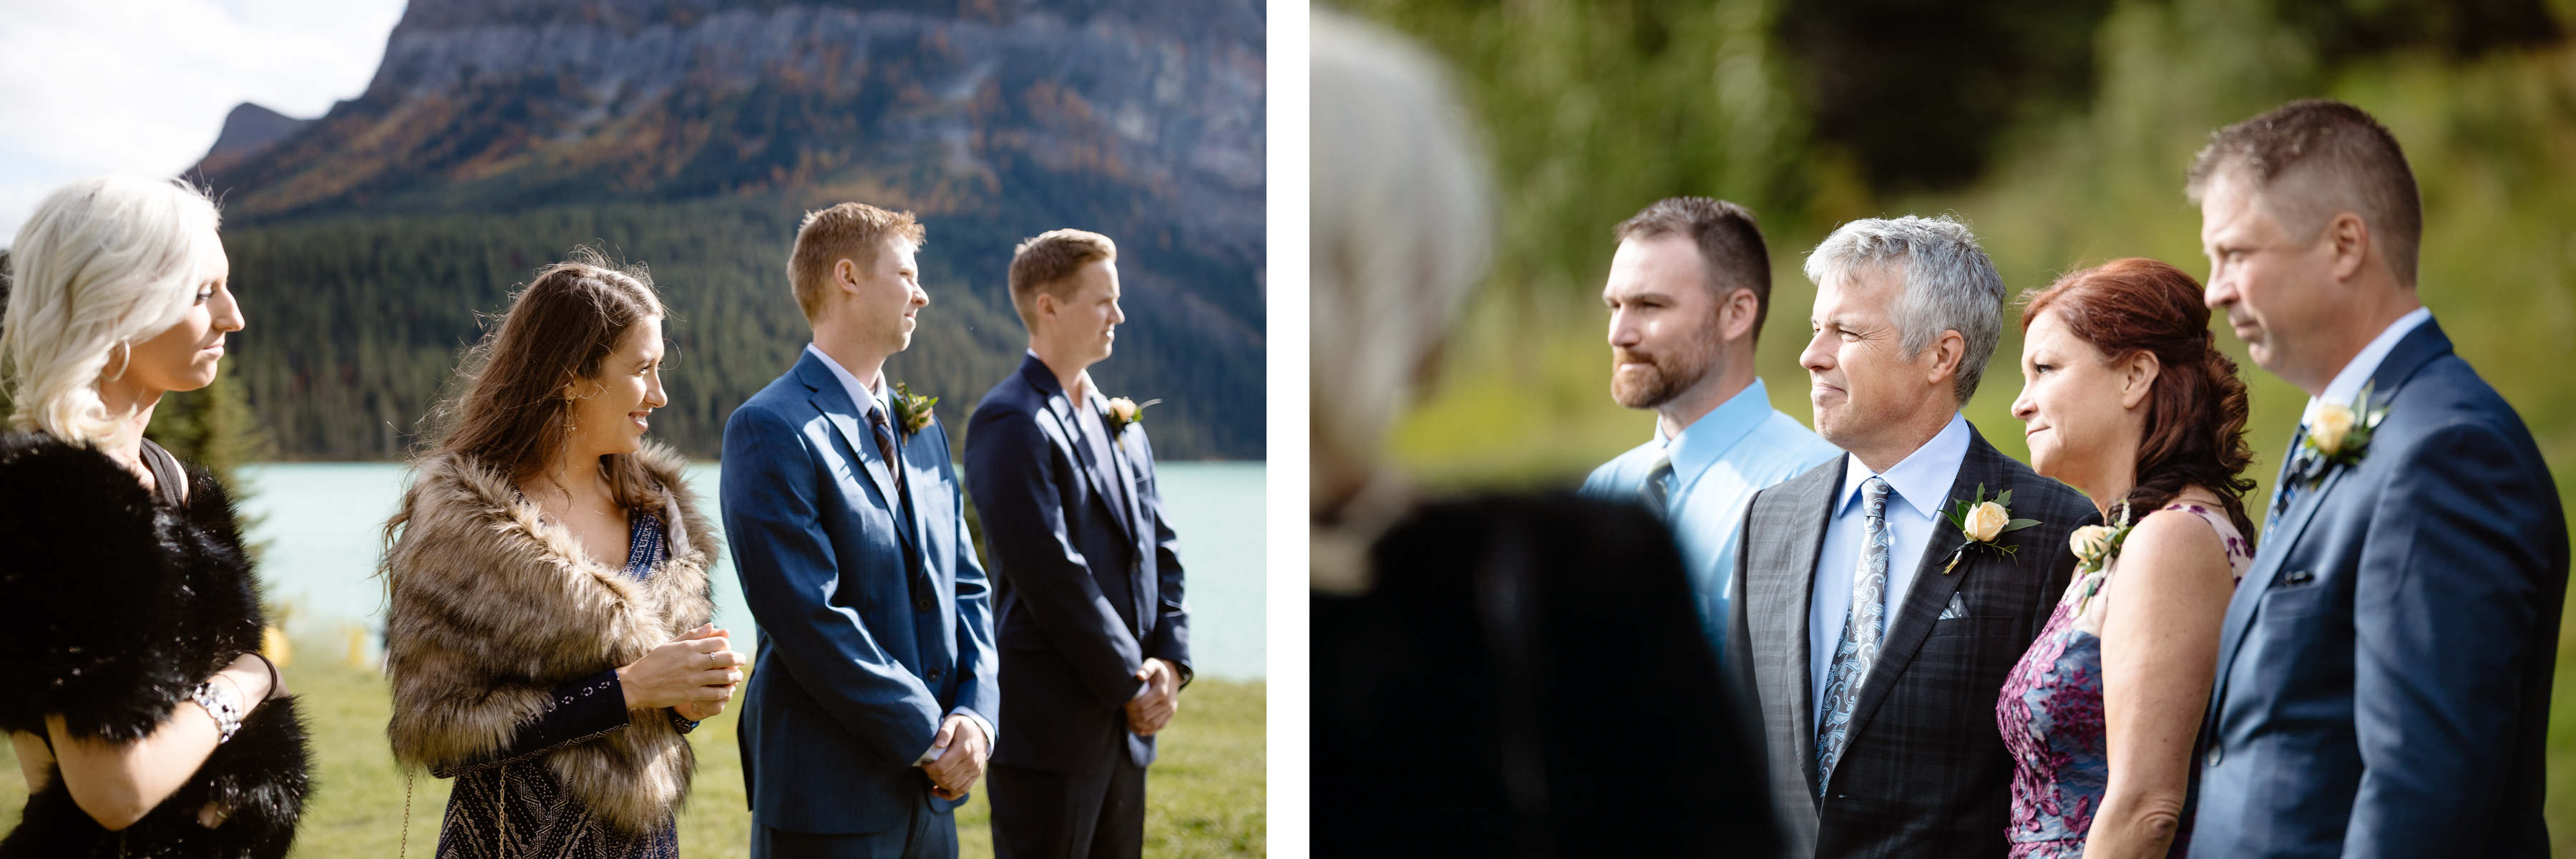 Moraine Lake wedding photos - Image 14